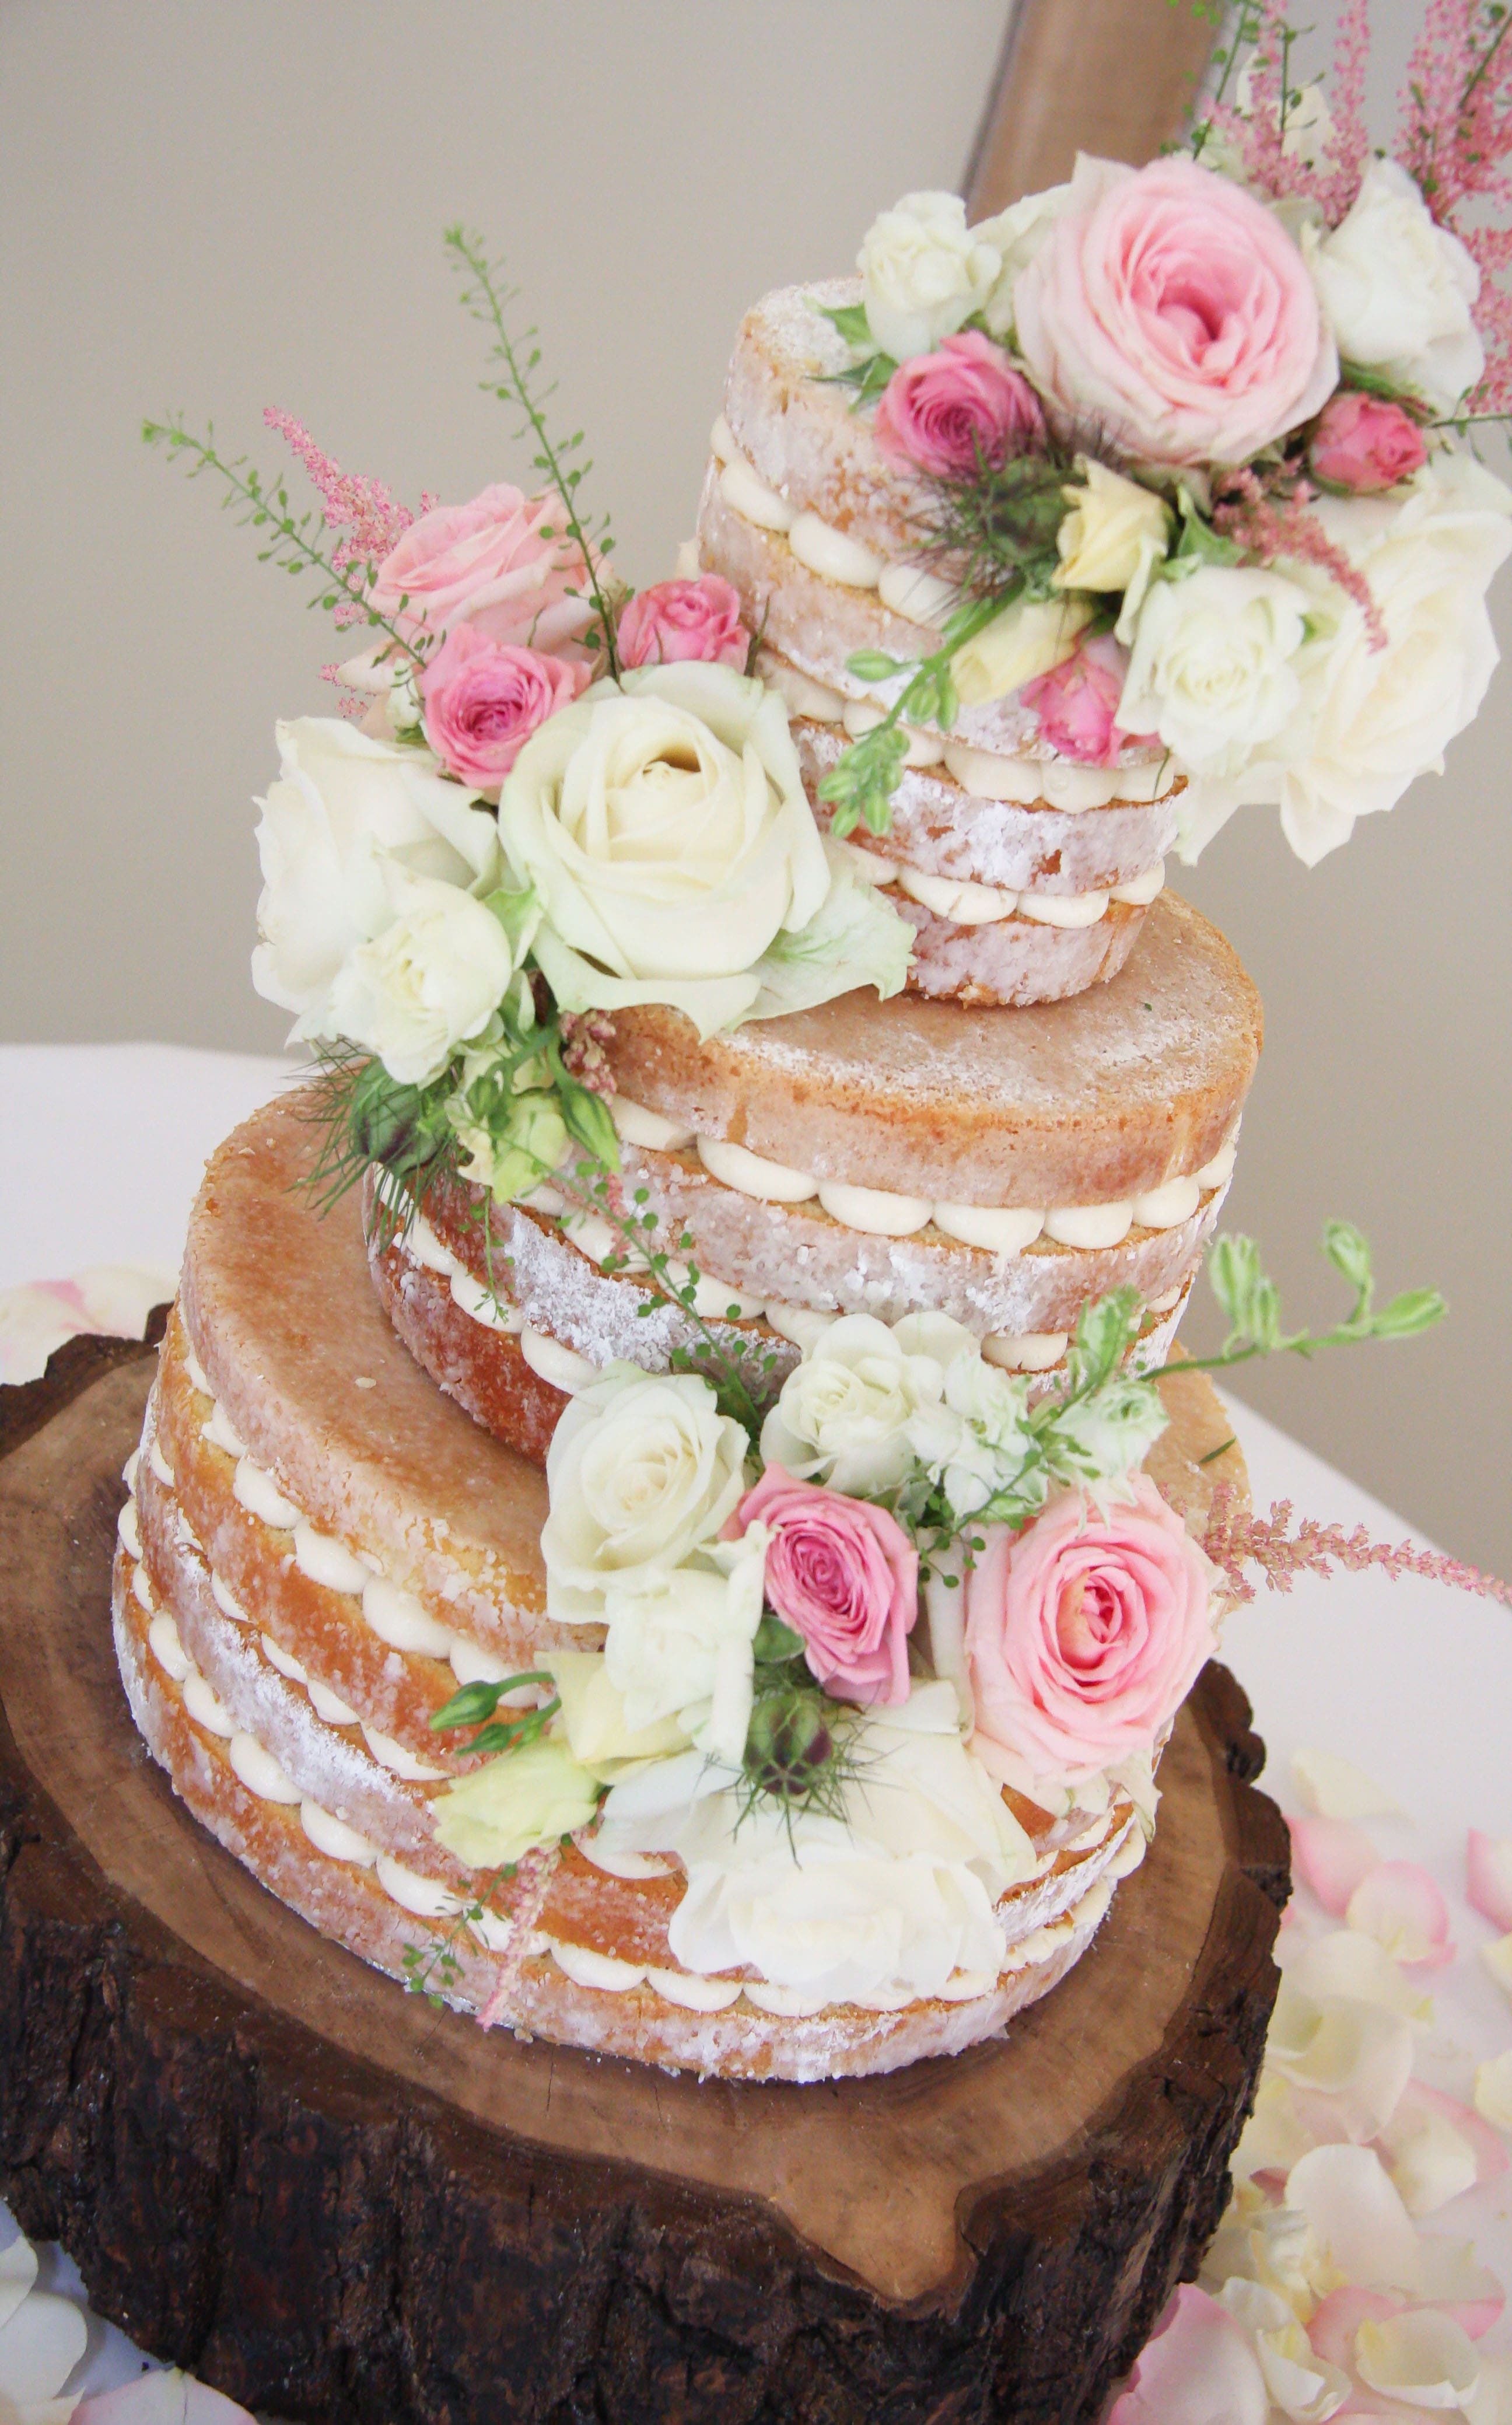 Naked Cake Serves 120 portions, £365, plus estimated £65 flowers